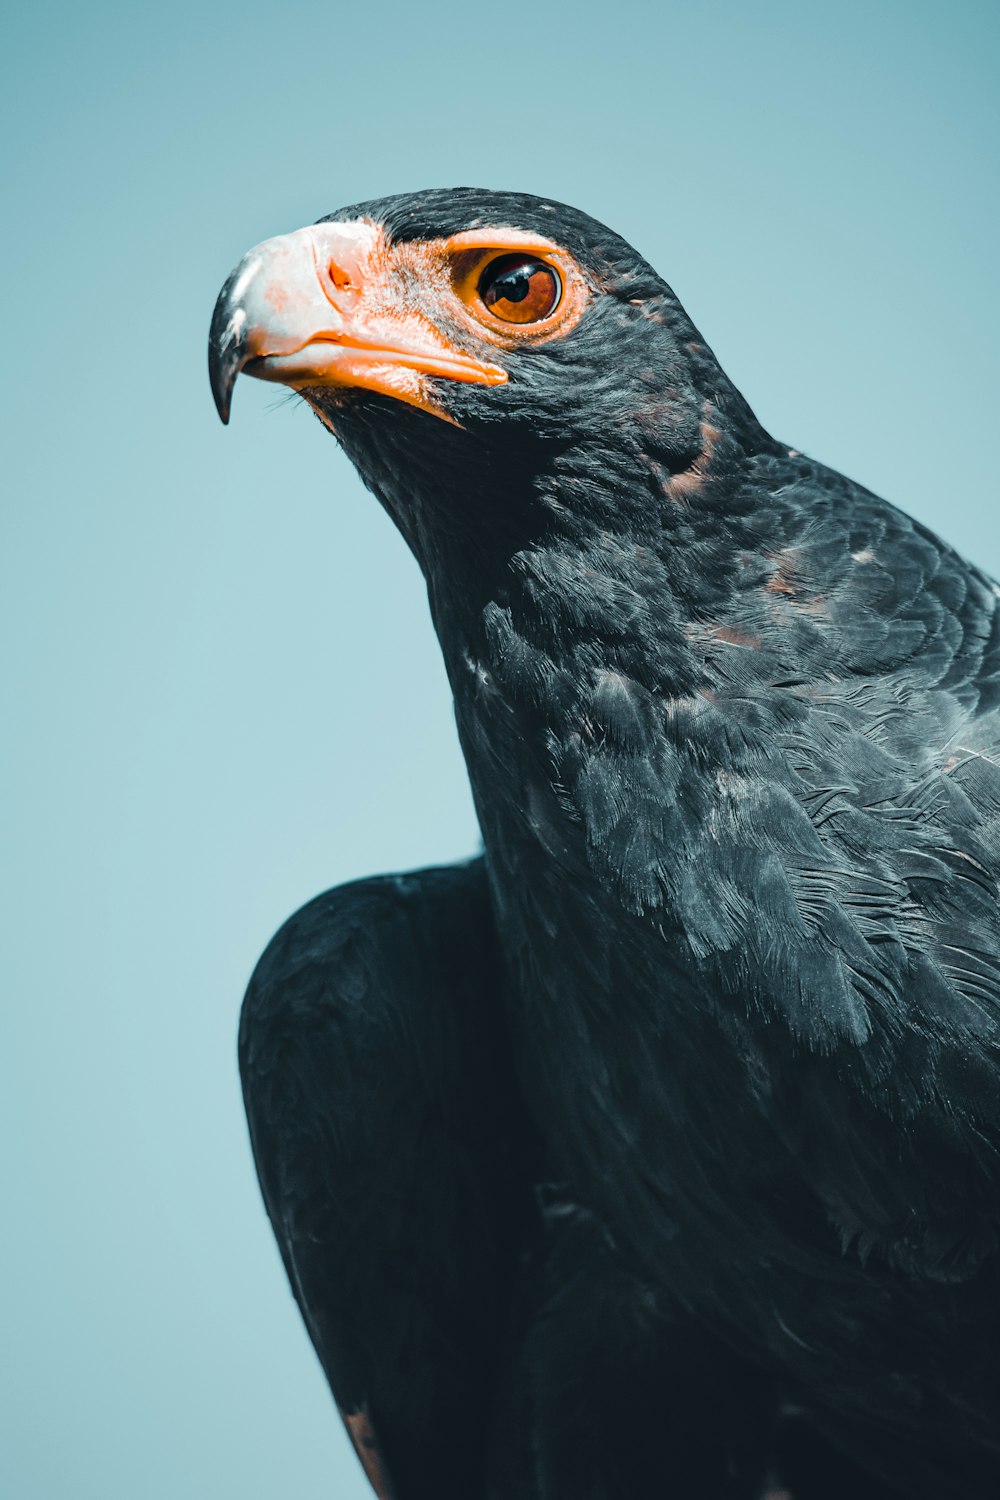 a close up of a black bird with an orange beak